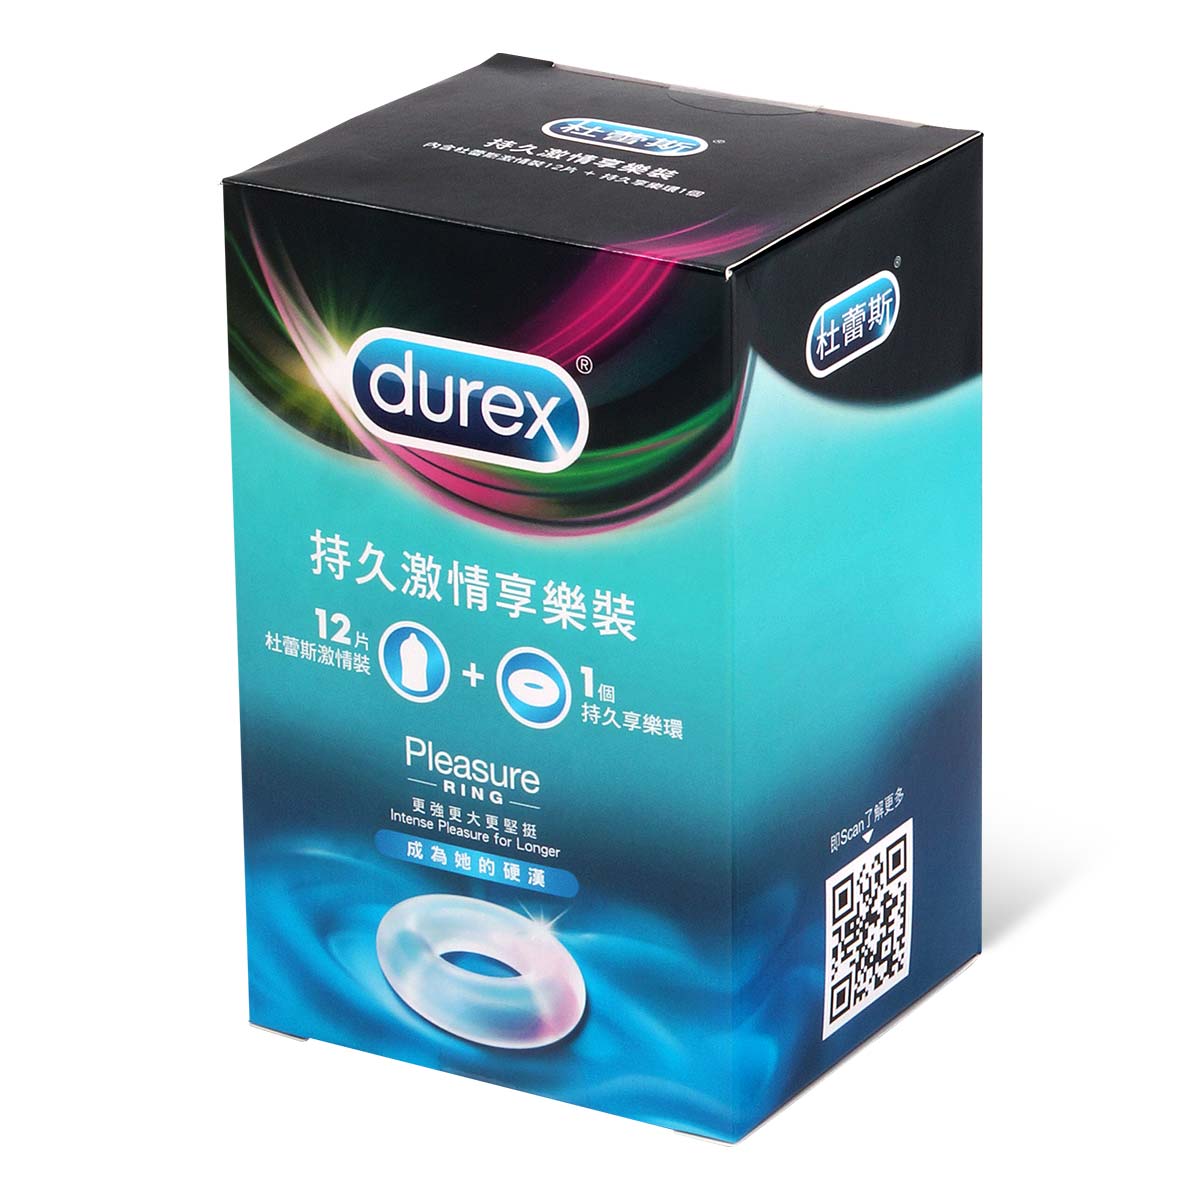 Durex Pleasure Ring + Durex Together 12's Pack Latex Condom combo-p_1